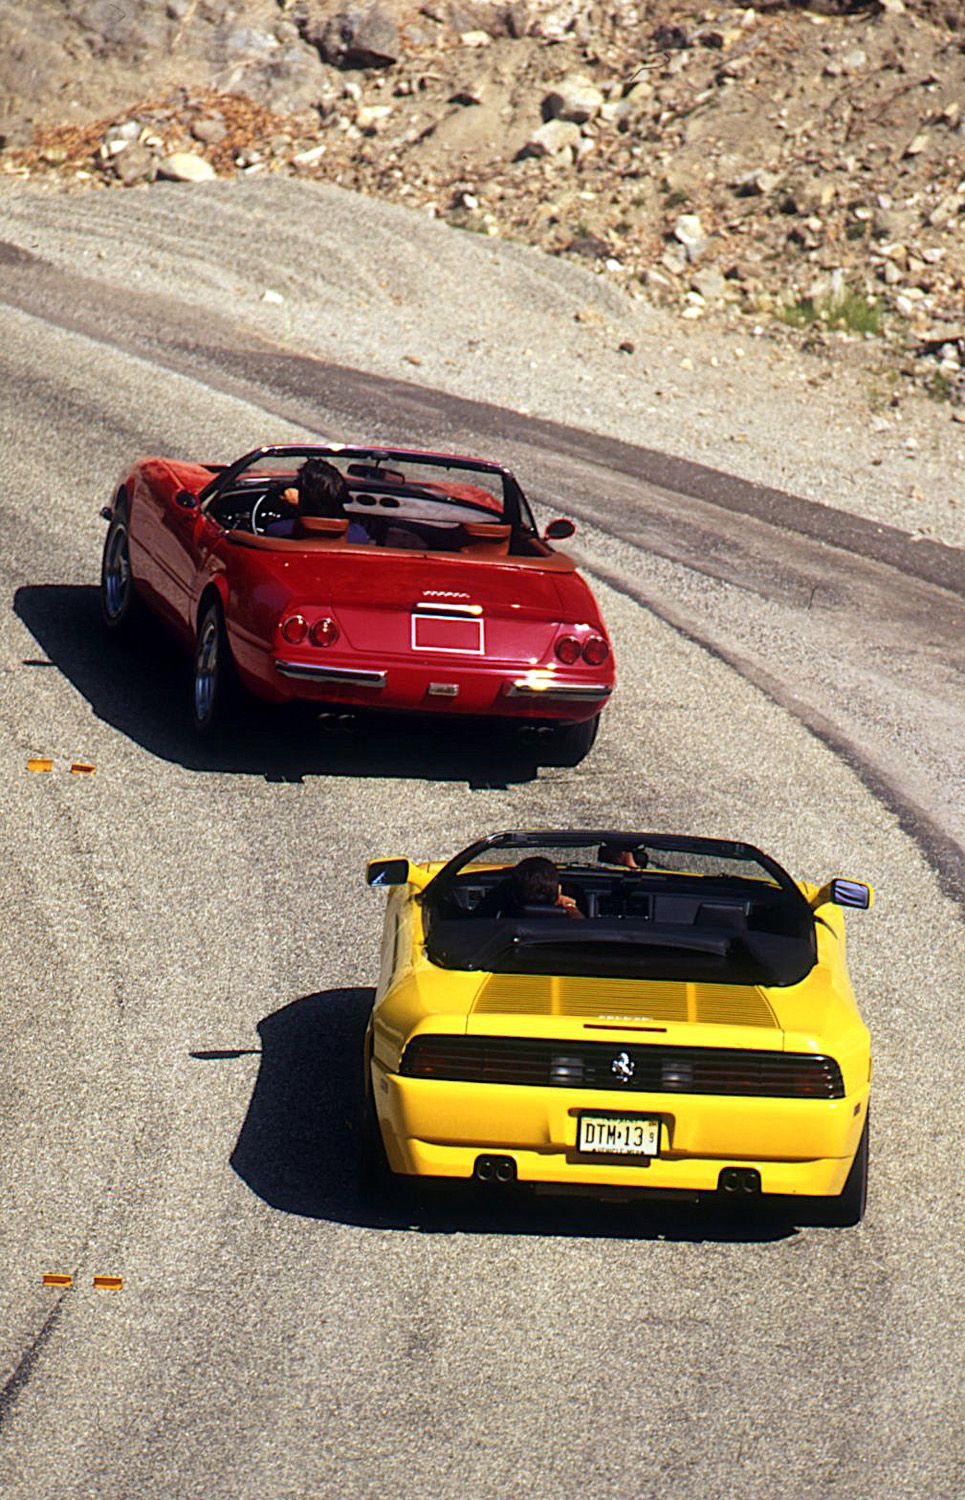 1994 Ferrari 348 Spider Encapsulates Tradition and Progress